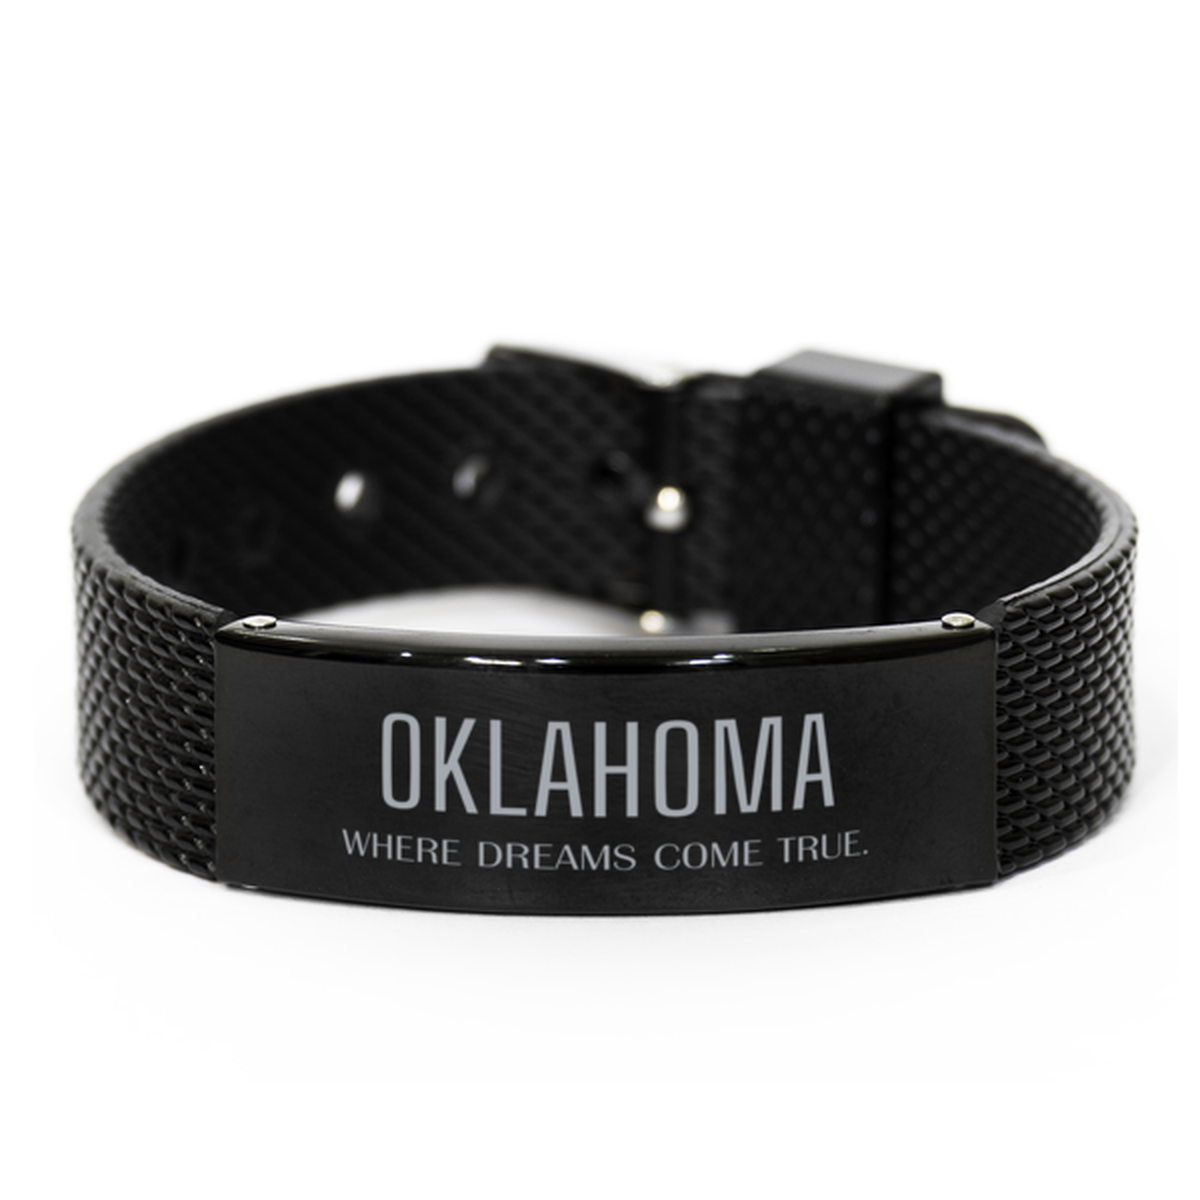 Love Oklahoma State Black Shark Mesh Bracelet, Oklahoma Where dreams come true, Birthday Inspirational Gifts For Oklahoma Men, Women, Friends